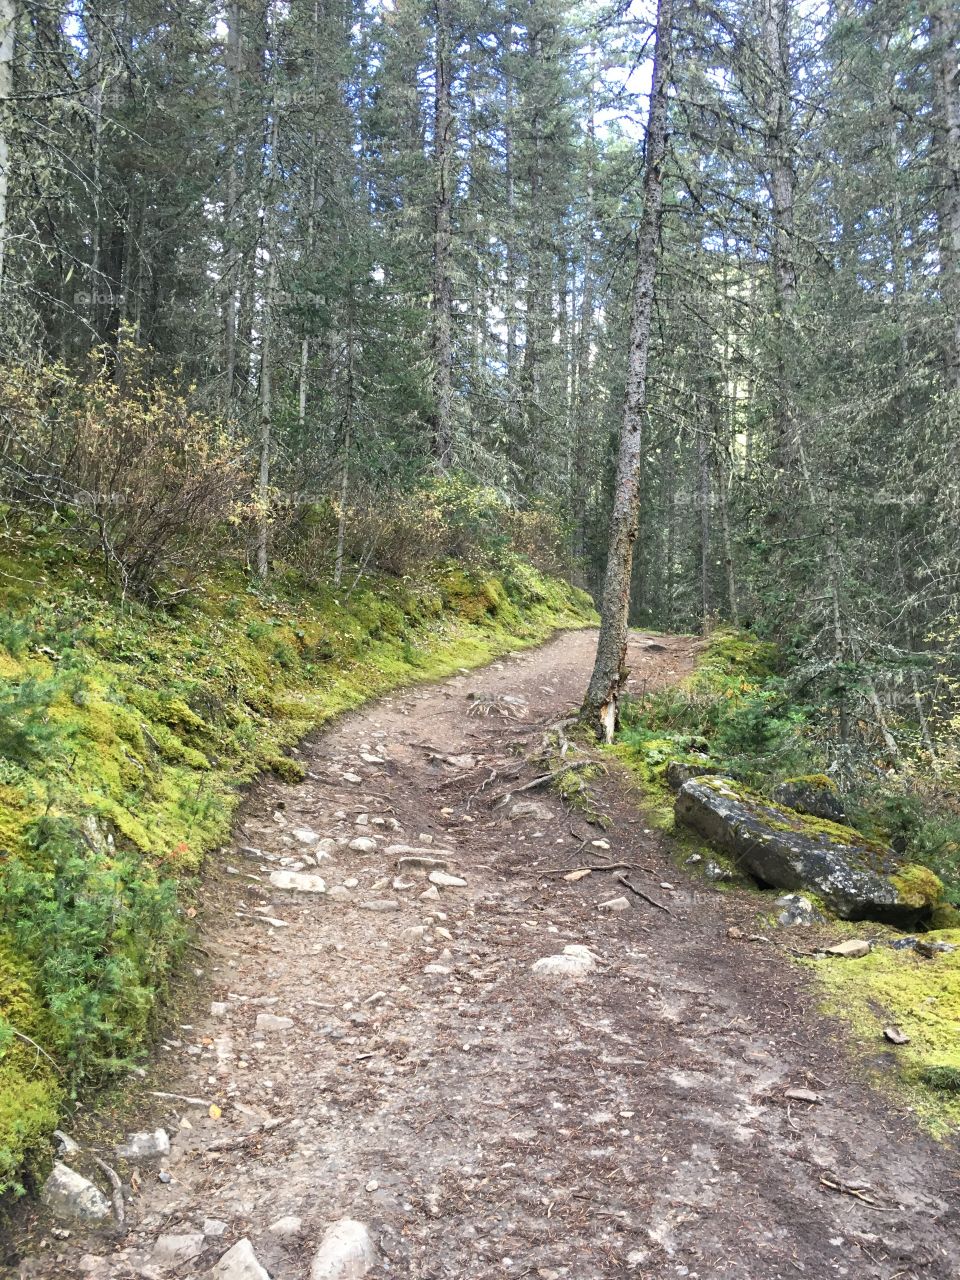 The forest near Banff